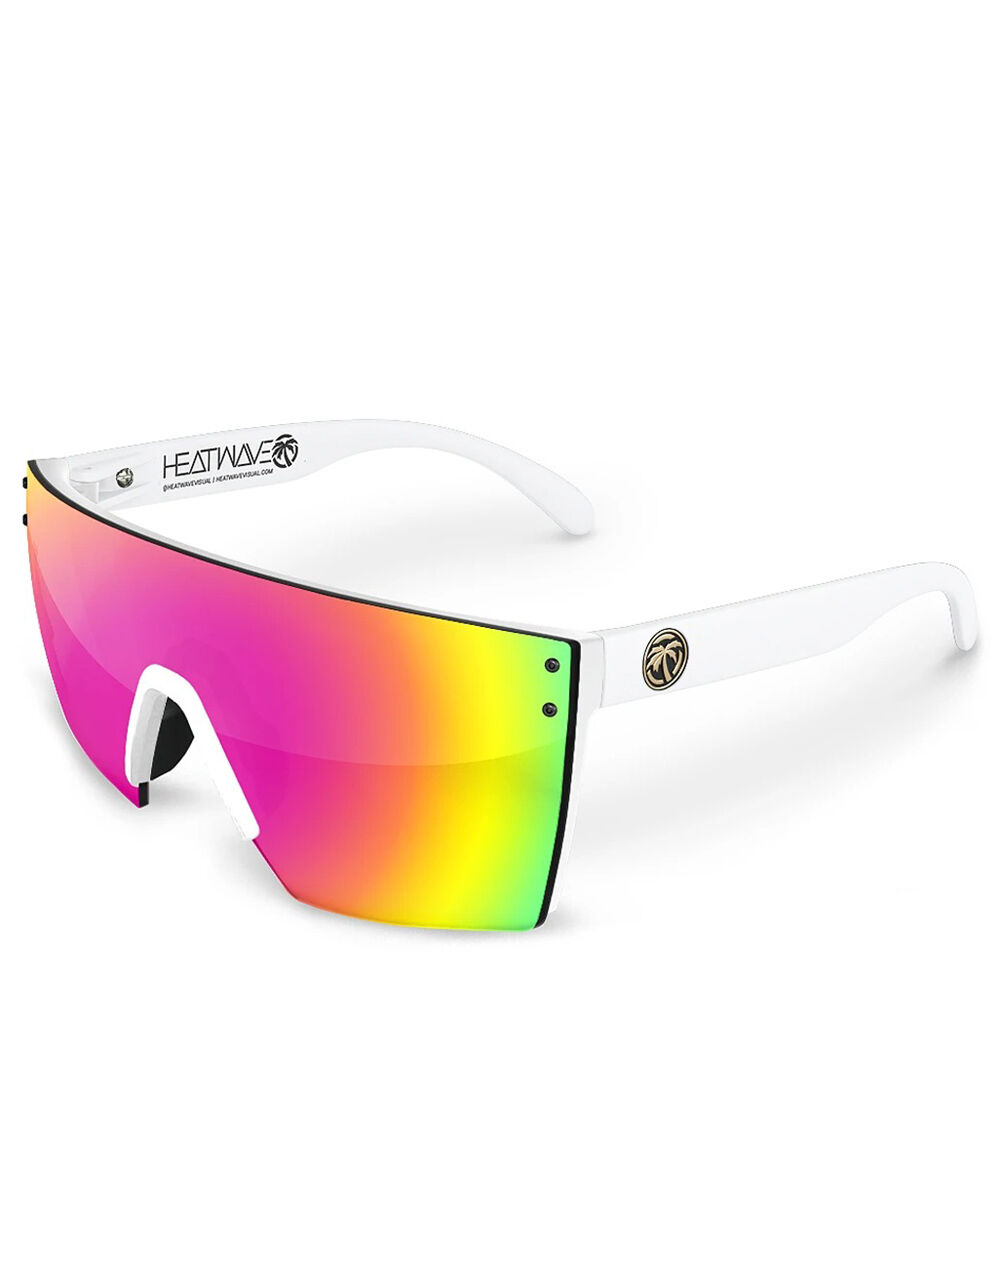 Heat Wave Visual Lazer Face White Z87 Sunglasses - White - One Size